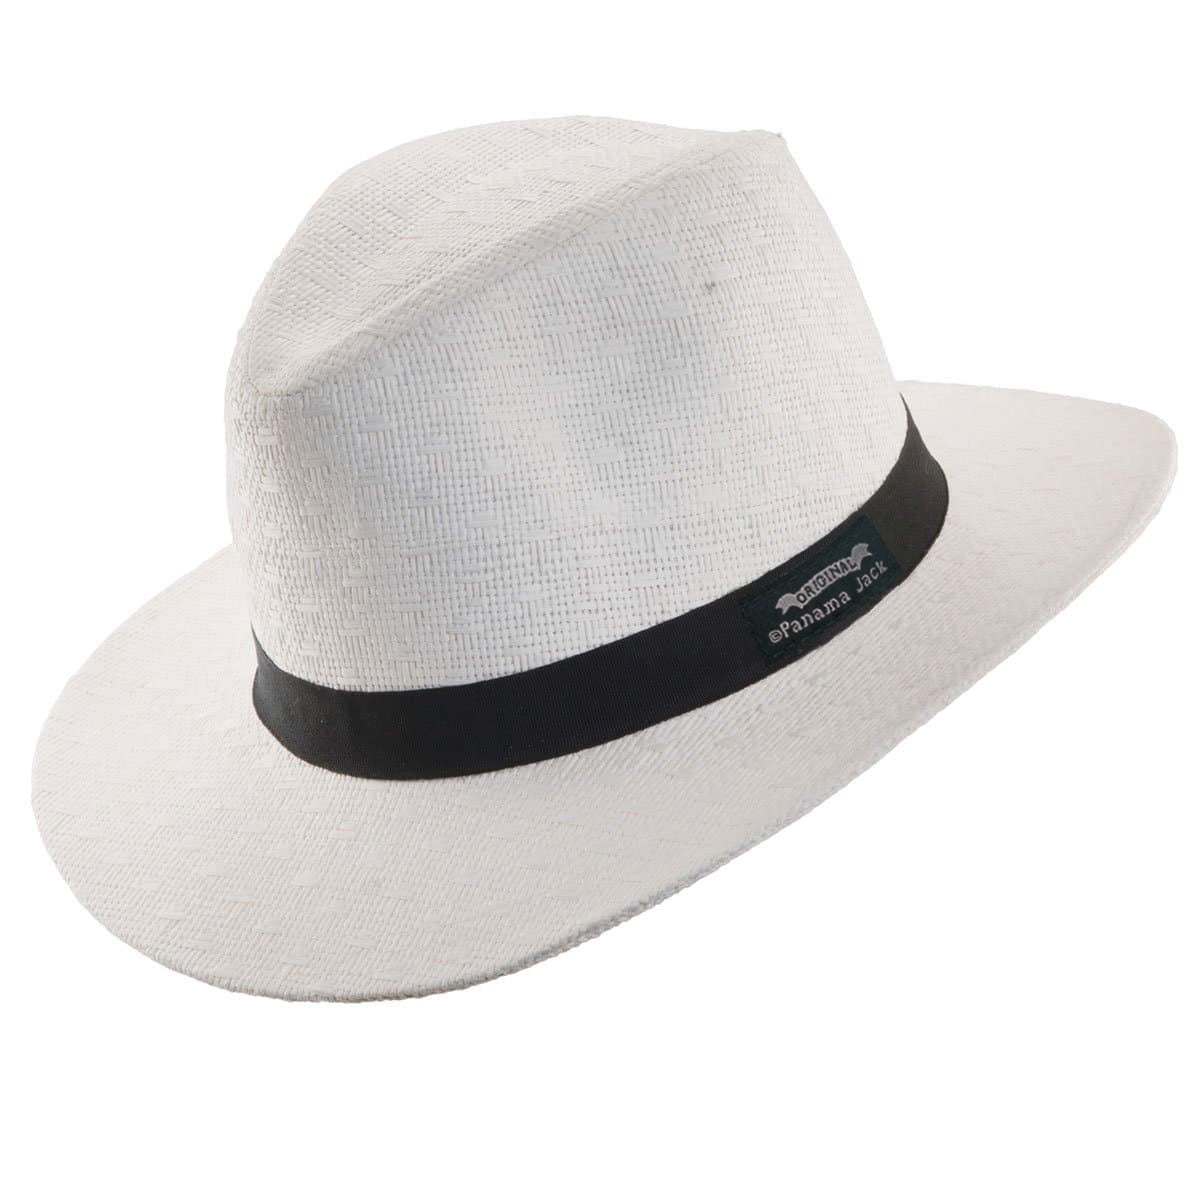 Panama Jack Dos Sombras Matte Seagrass Straw Safari Sun Hat with 3-Pleat Ribbon 